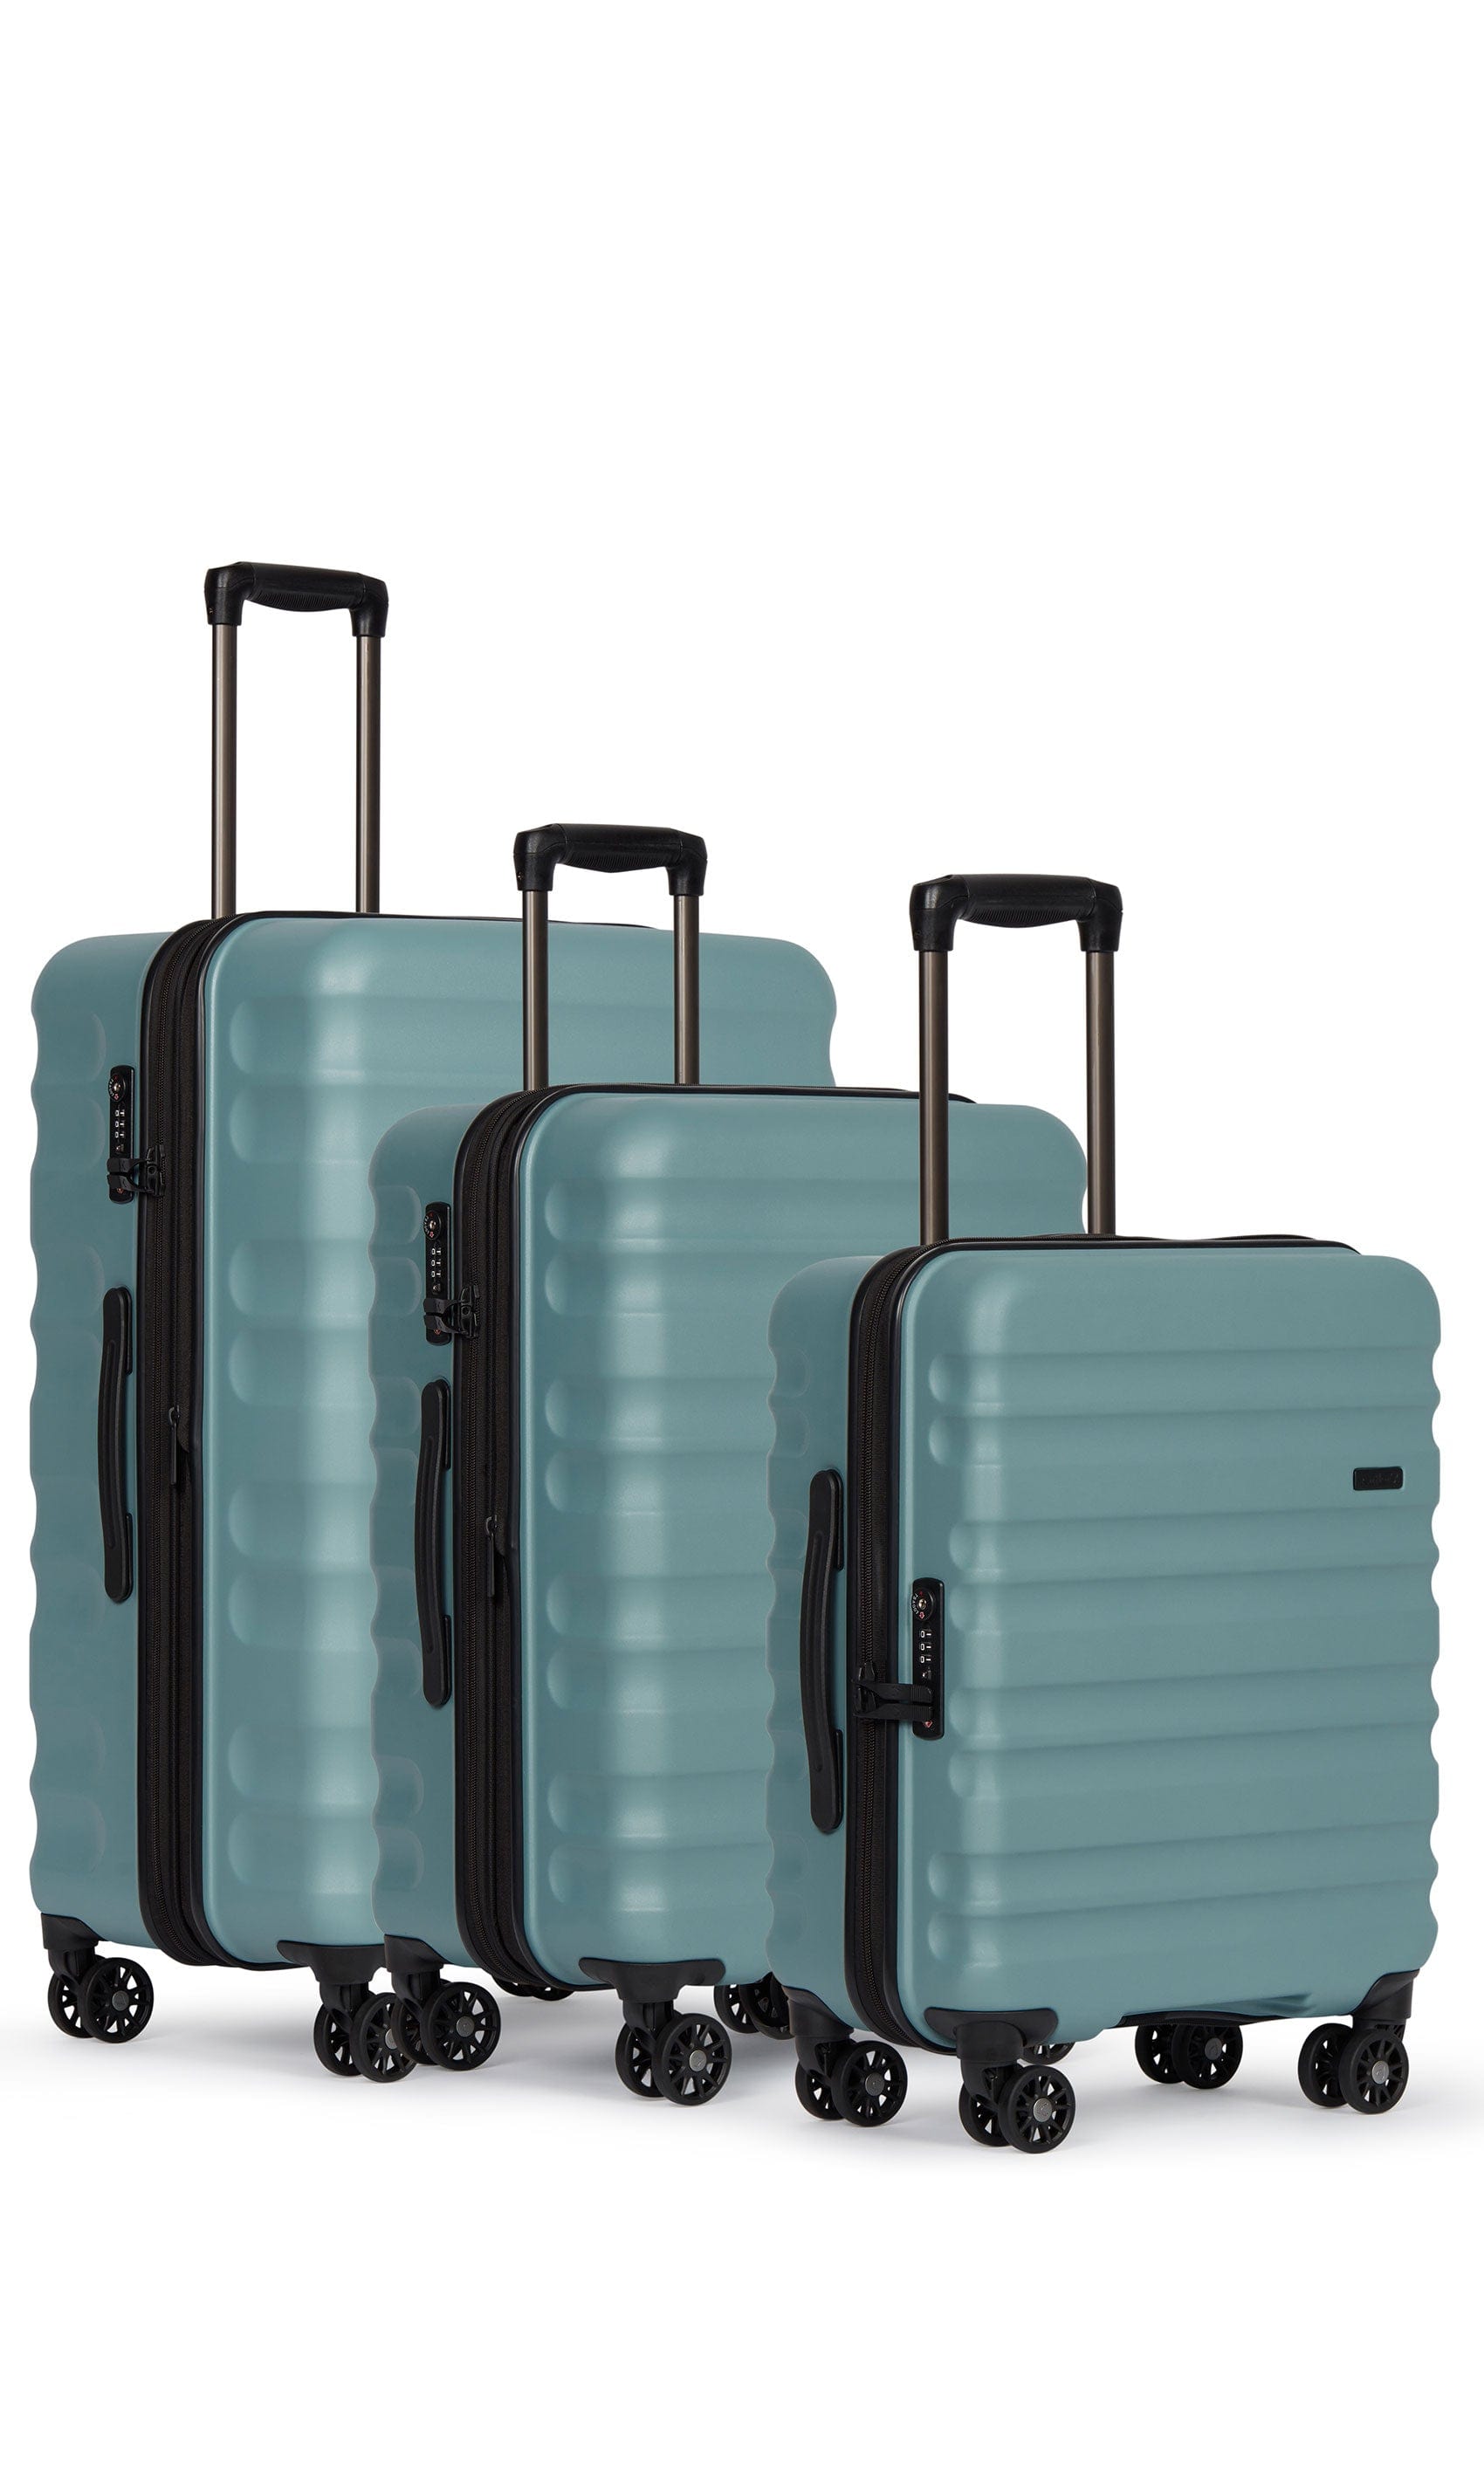 Antler Luggage -  Clifton set in mineral - Hard Suitcases Clifton Set of 3 Suitcases Mineral | Hard Suitcase | Antler UK